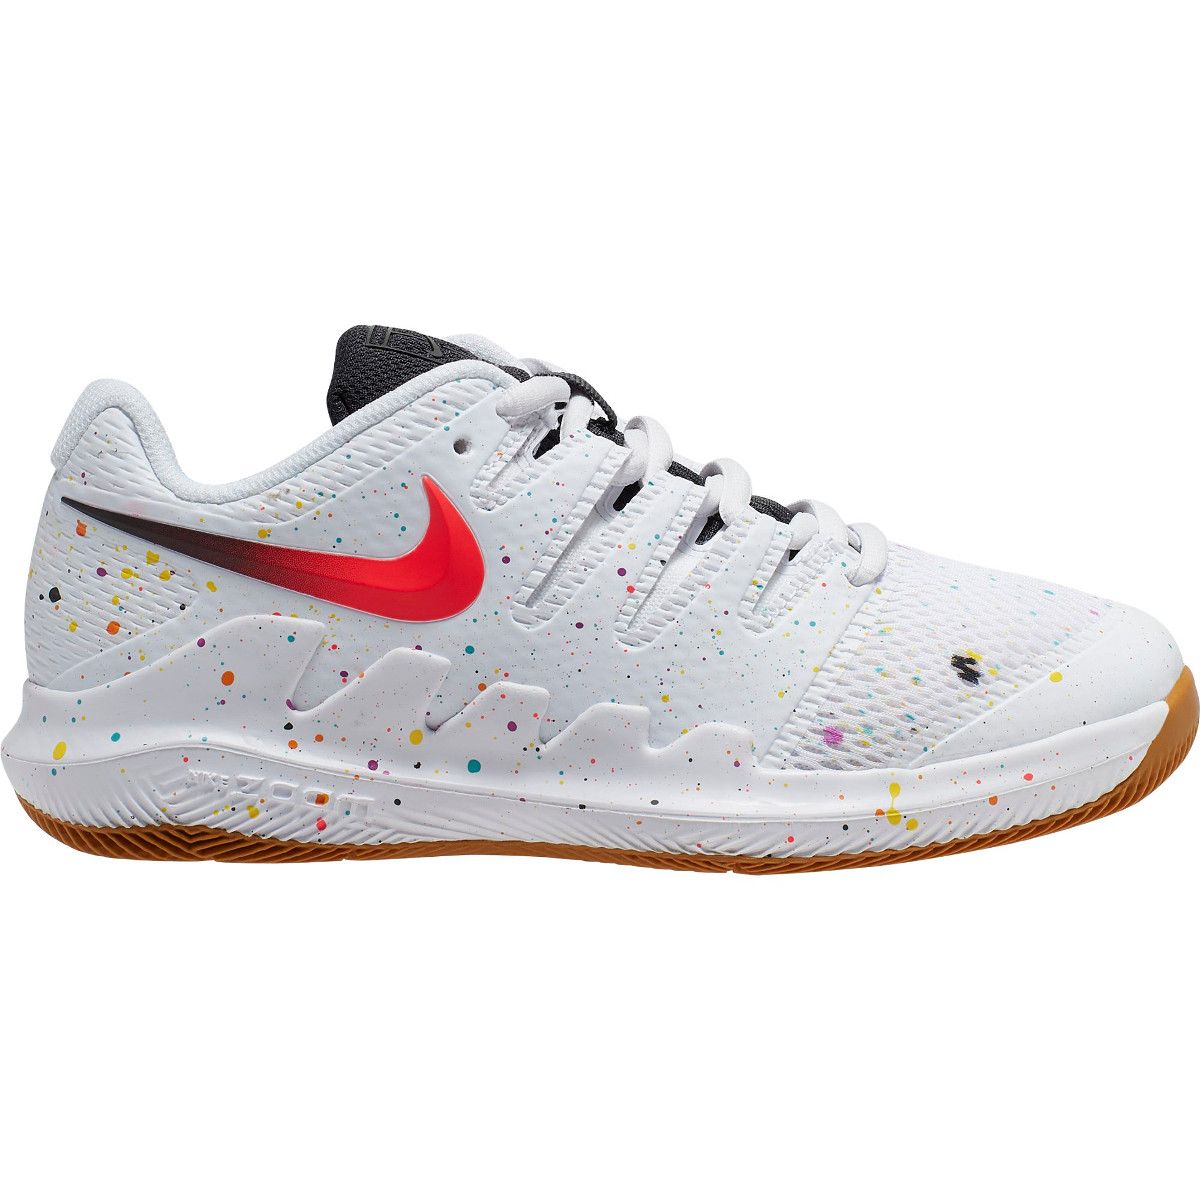 NikeCourt Vapor X Junior Tennis Shoes AR8851-108